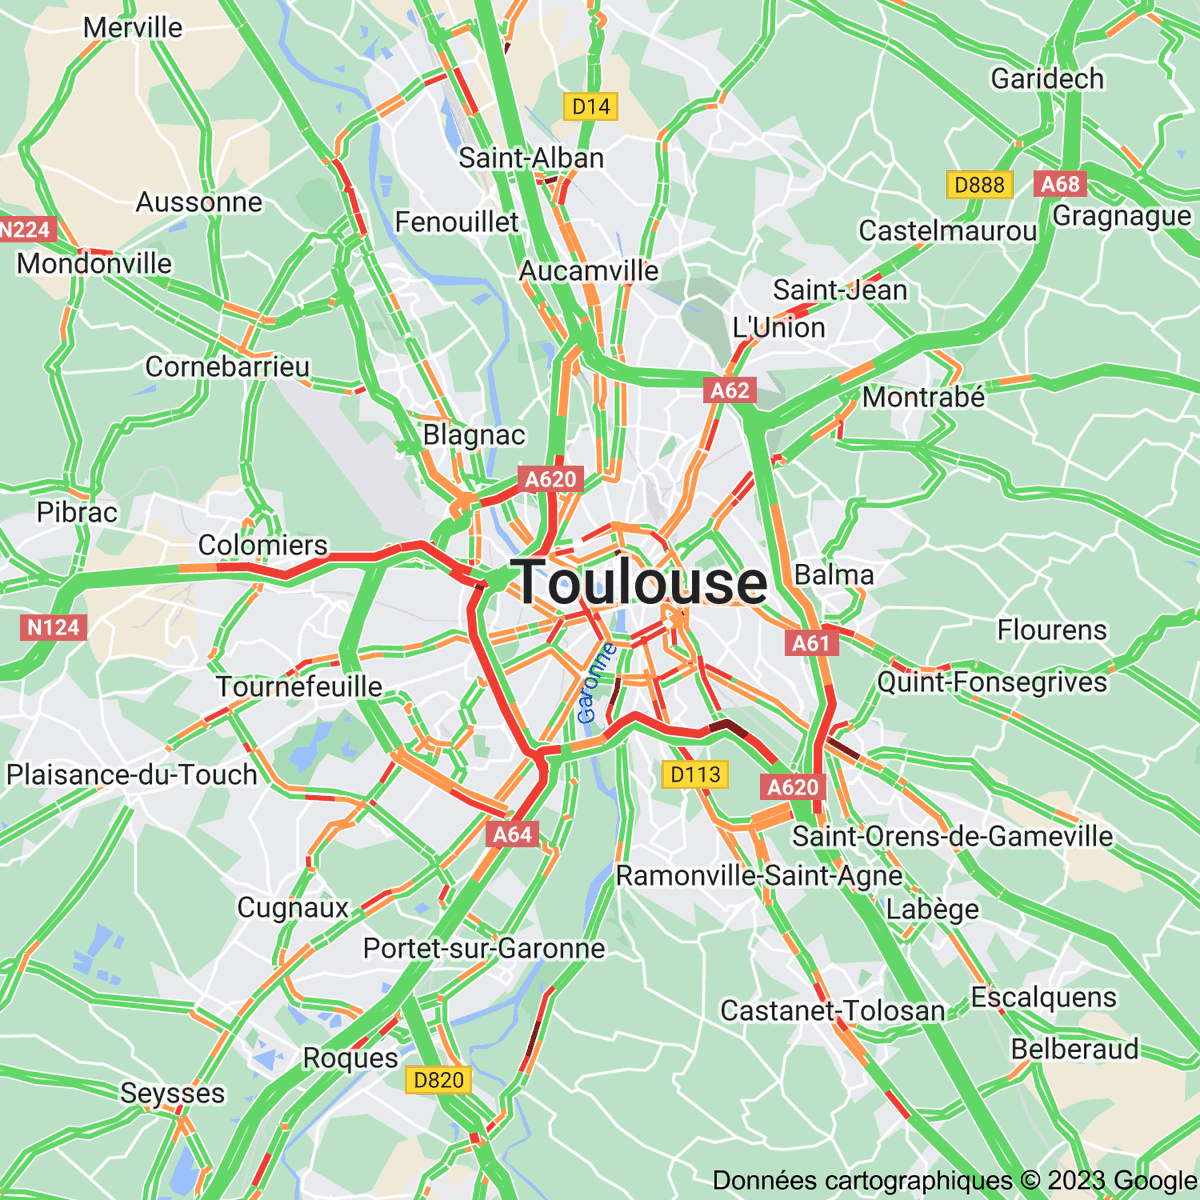 [FLASH 18:30] Trafic à Toulouse toulousetrafic.com #Toulouse #ToulousePeriph #InfoTrafic